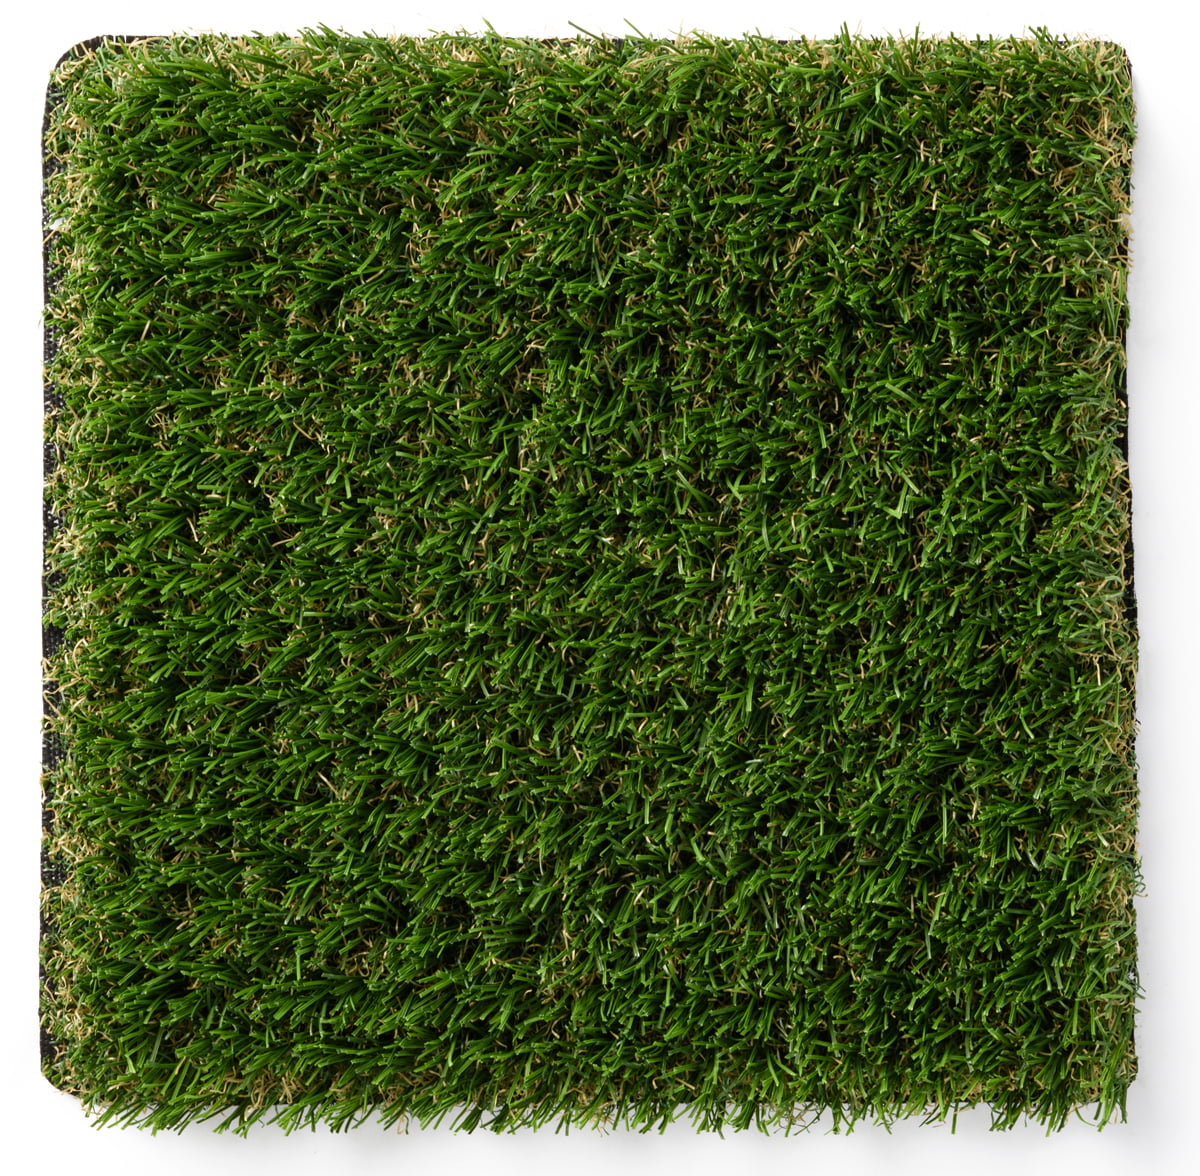 Details about   Artificial Grass Carpet Garden Green Fake Synthetic Landscape Lawn Mat Turf. 